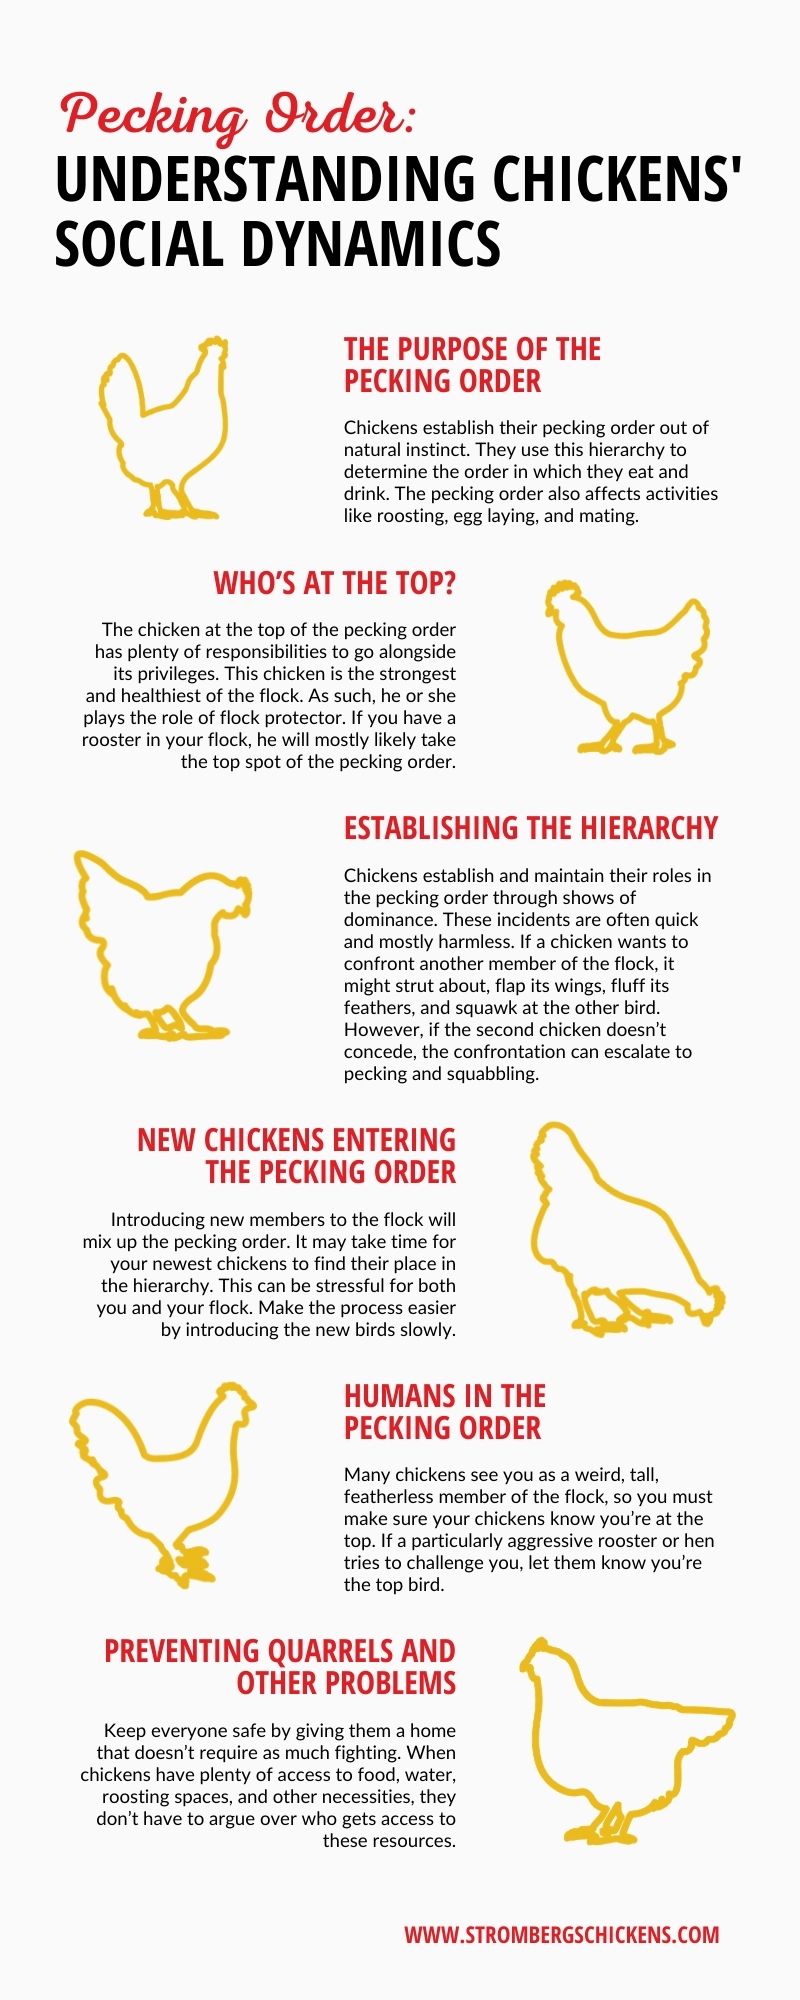 Pecking Order: Understanding Chickens’ Social Dynamics